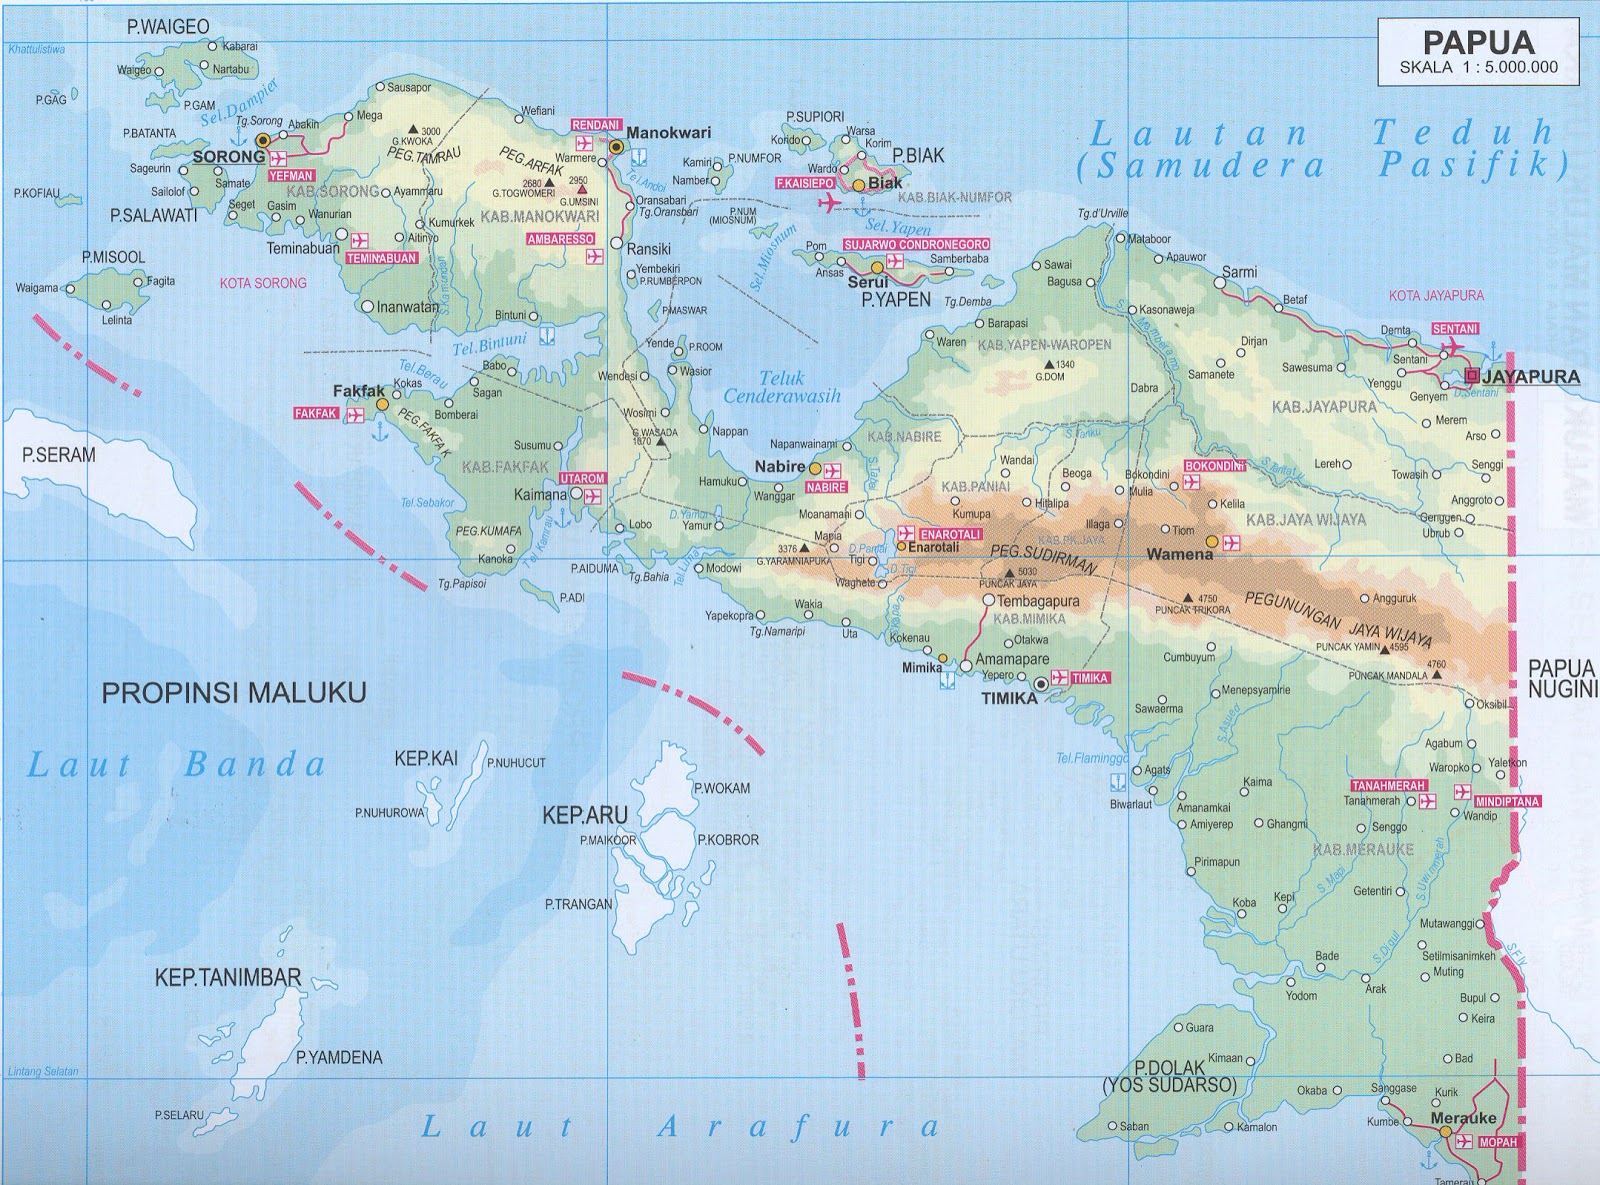 AMAZING INDONESIA: PAPUA PROVINCE MAP